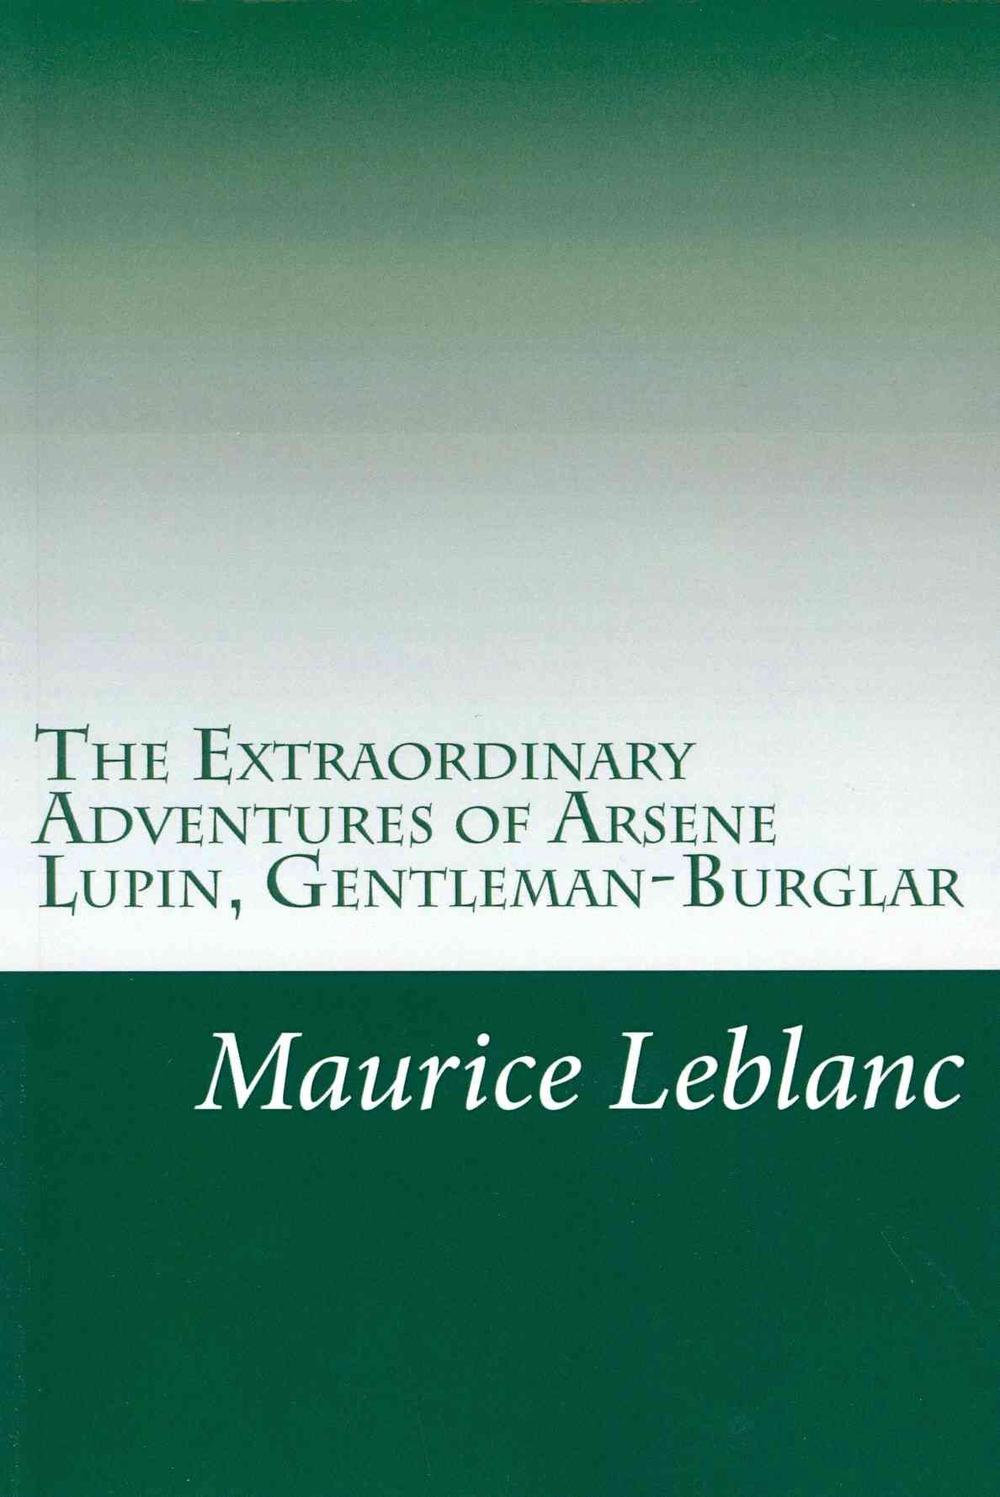 lupin the gentleman burglar